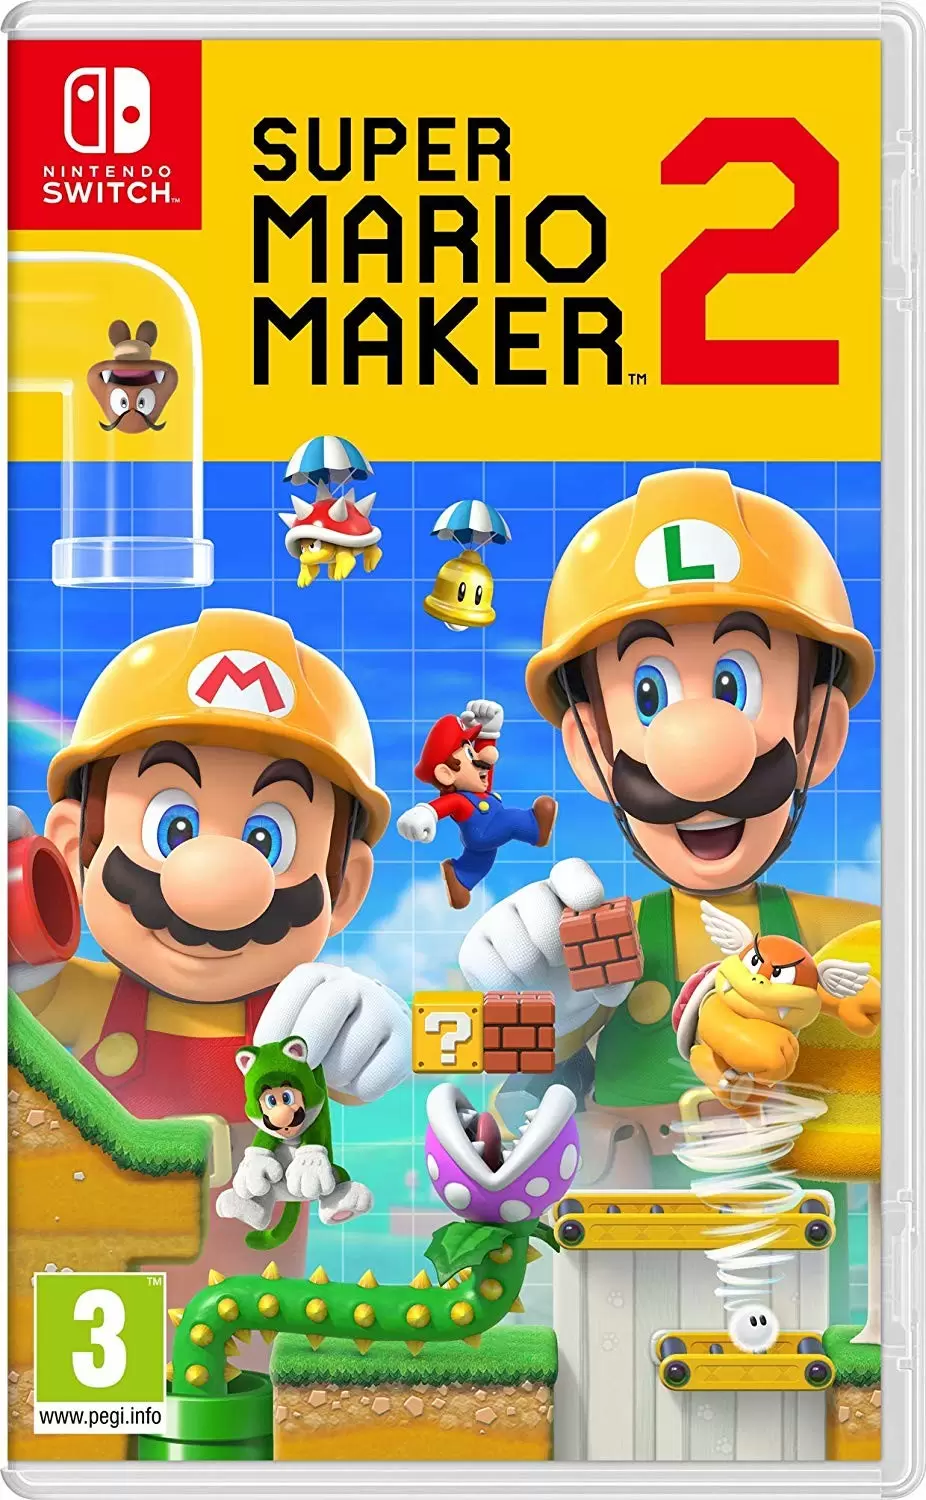 Nintendo Switch Games - Super Mario Maker 2